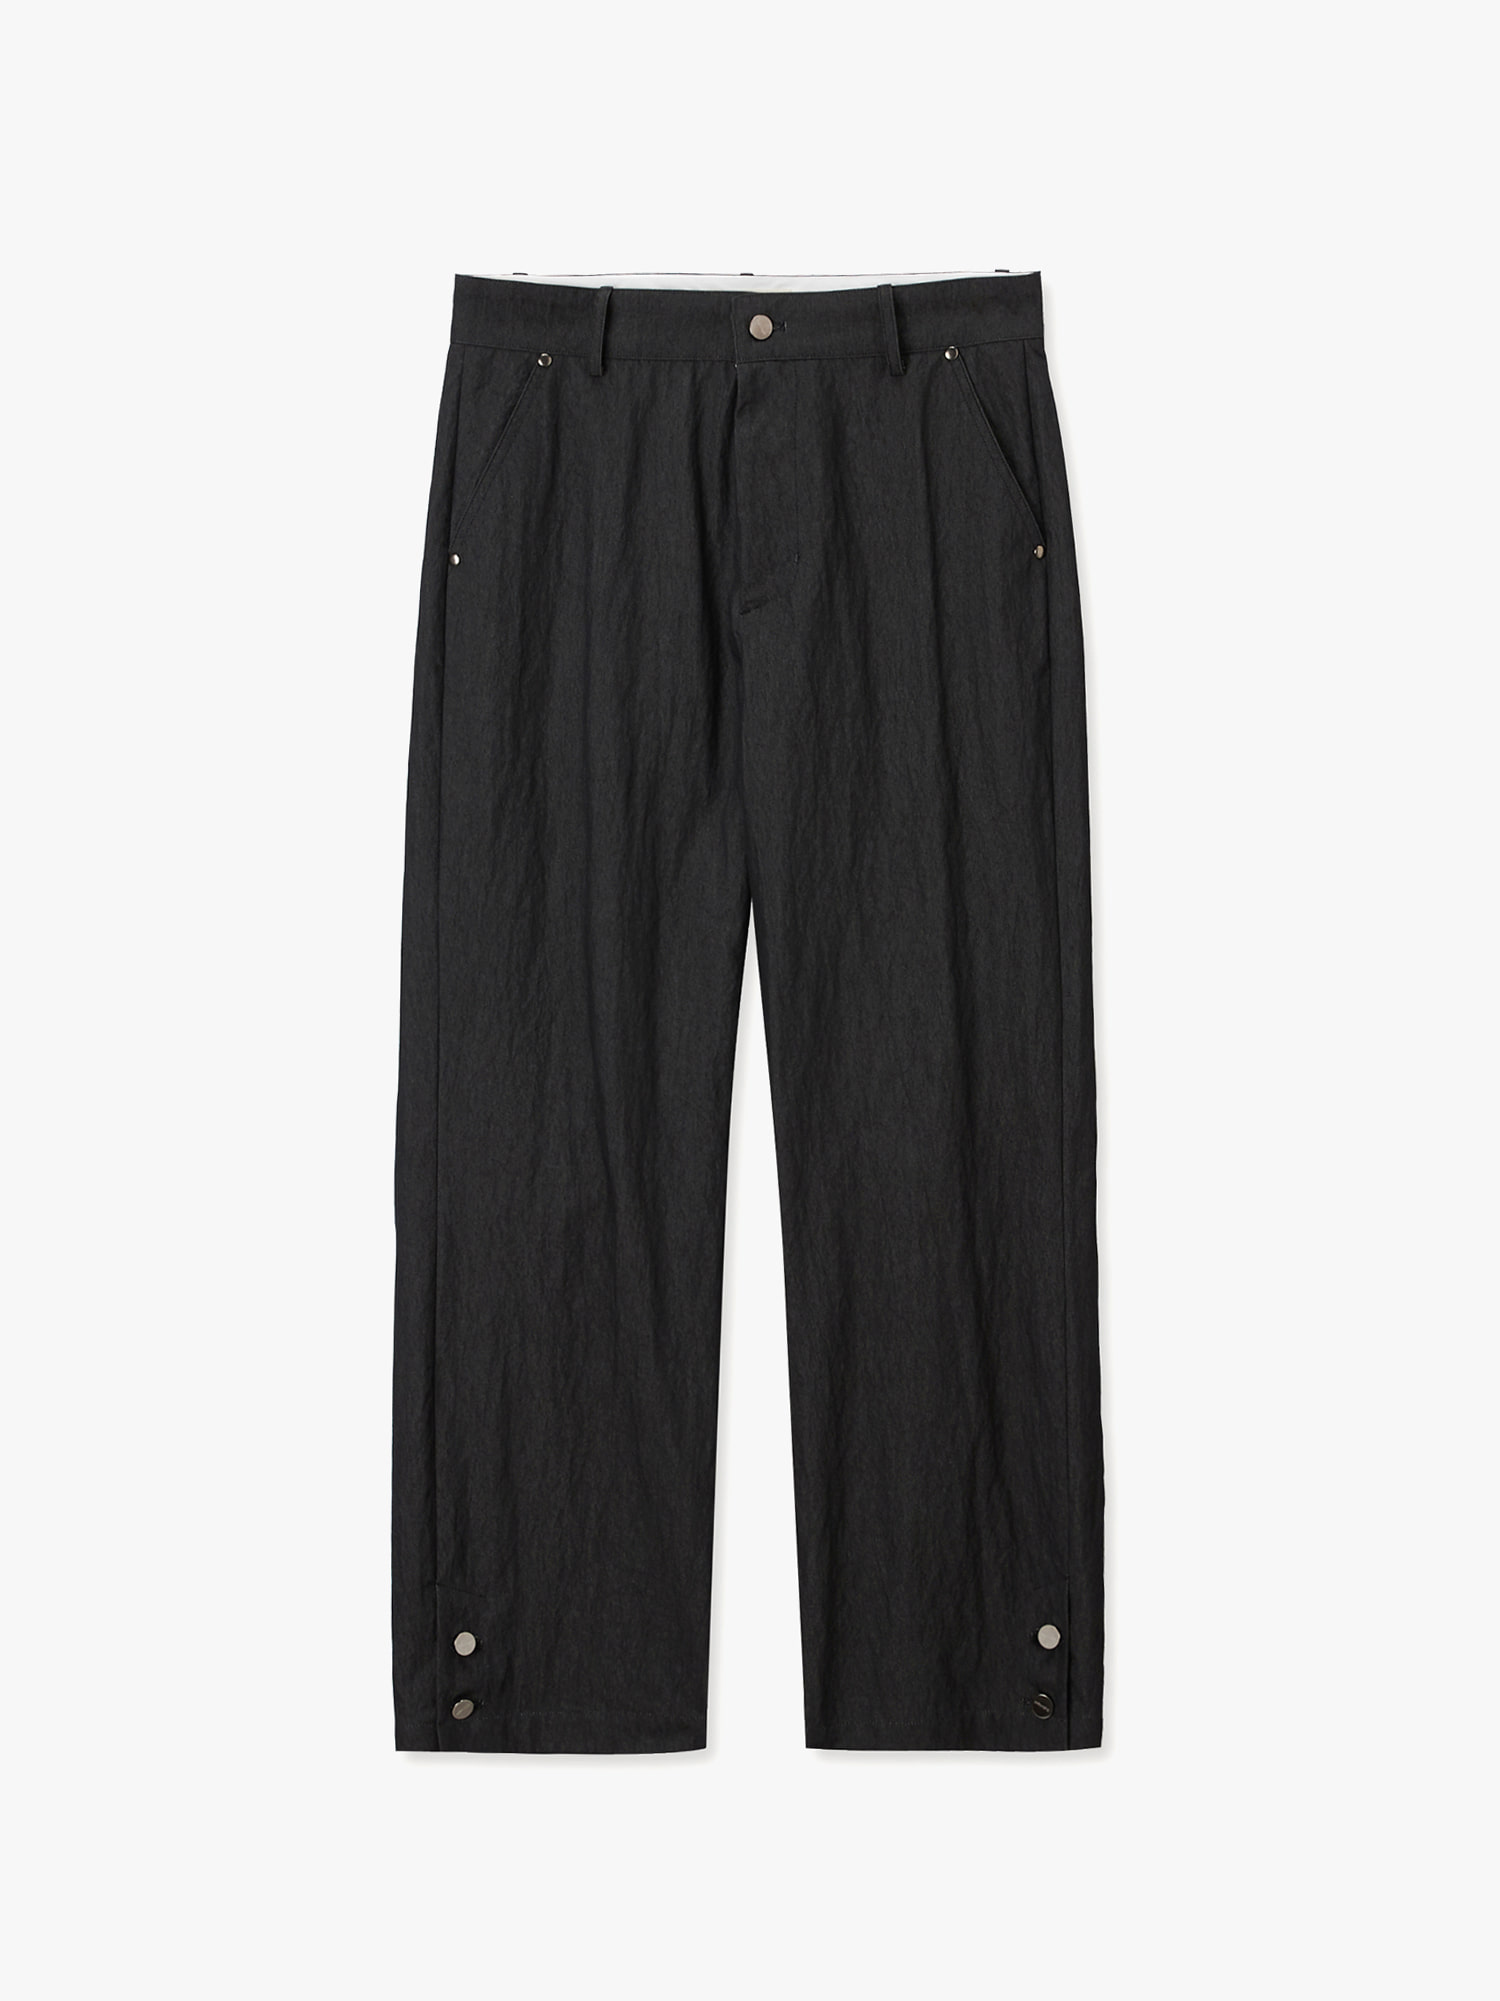 Garment Button Semi Wide Pants (Black)